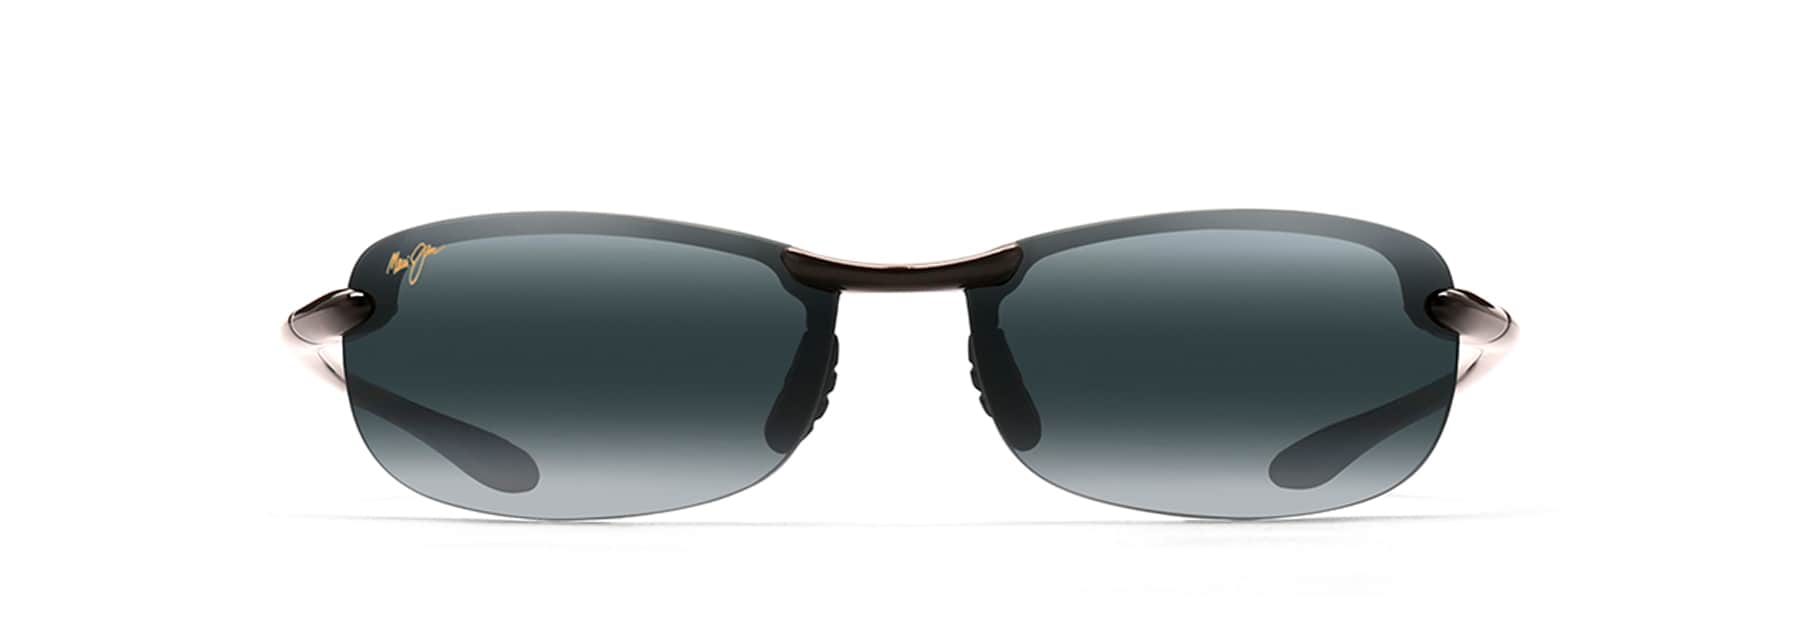 Polarized Gloss Black Rimless Frame Sunglasses Maui Jim Makaha Reader Universal Fit